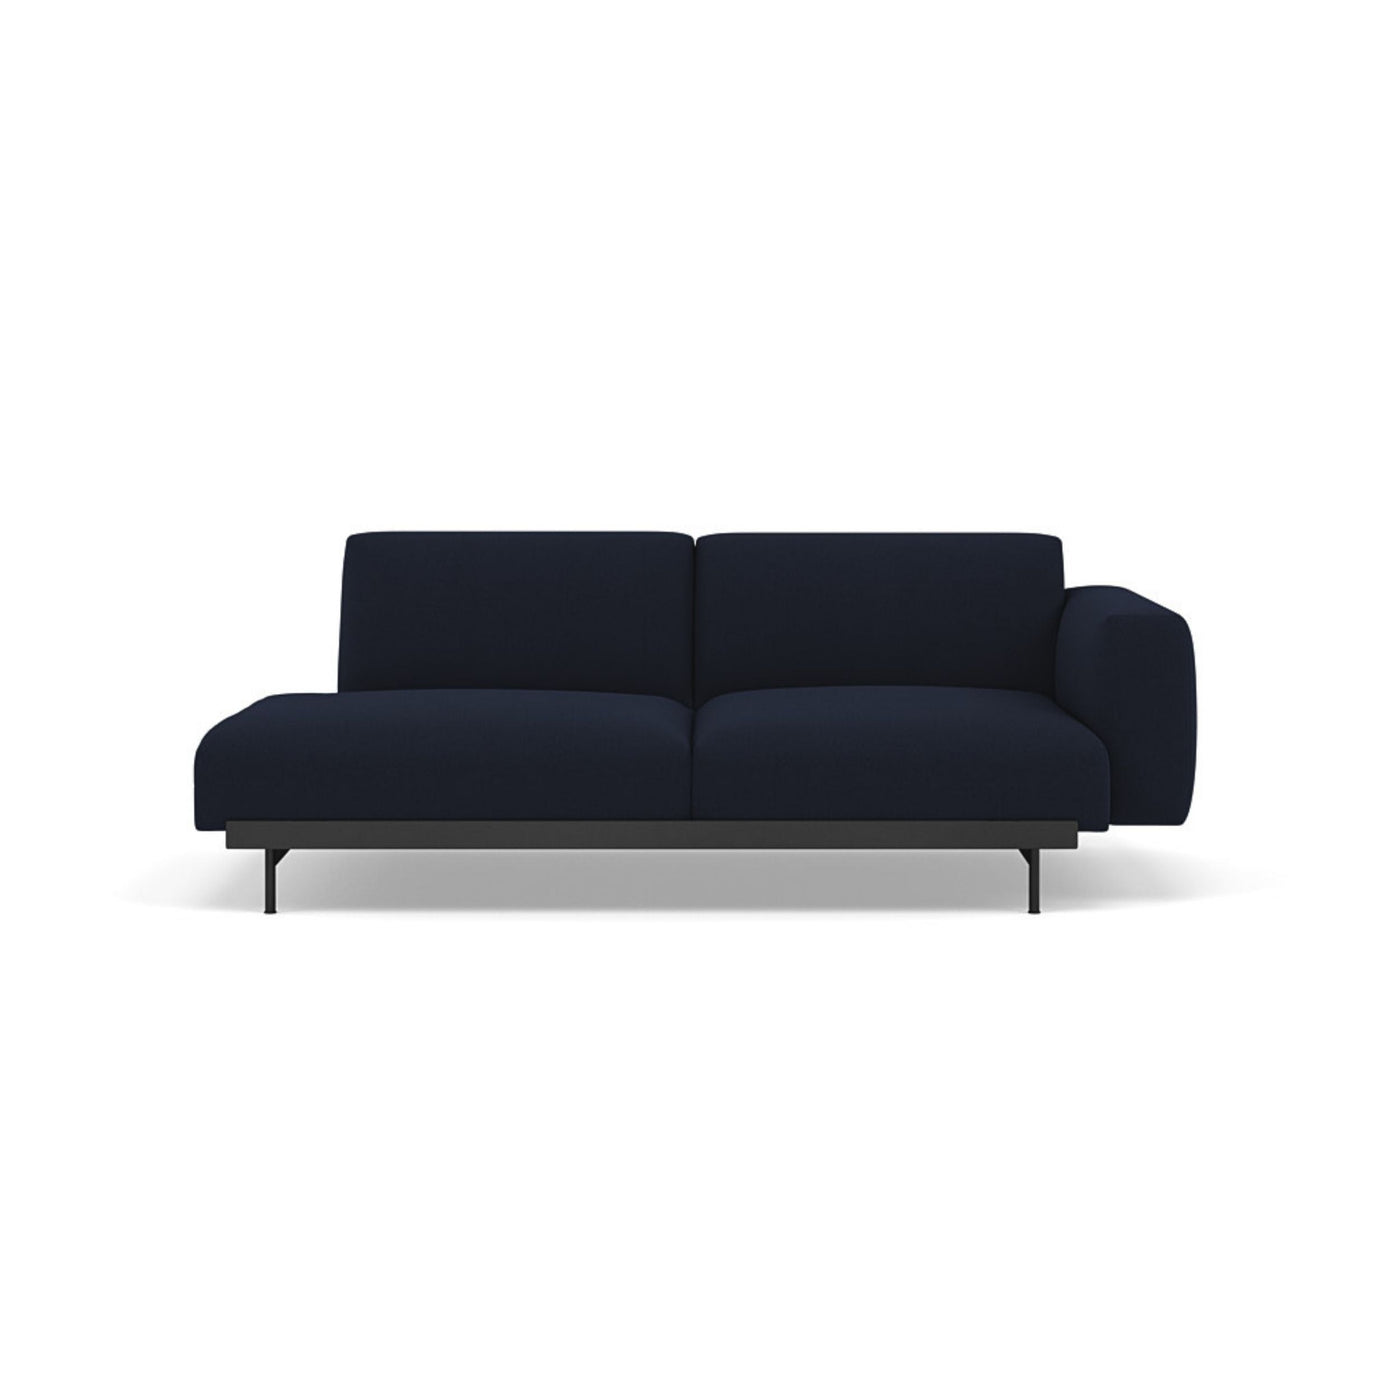 Muuto In Situ Modular 2 Seater Sofa, configuration 2 in vidar 554 fabric. Made to order from someday designs #colour_vidar-554